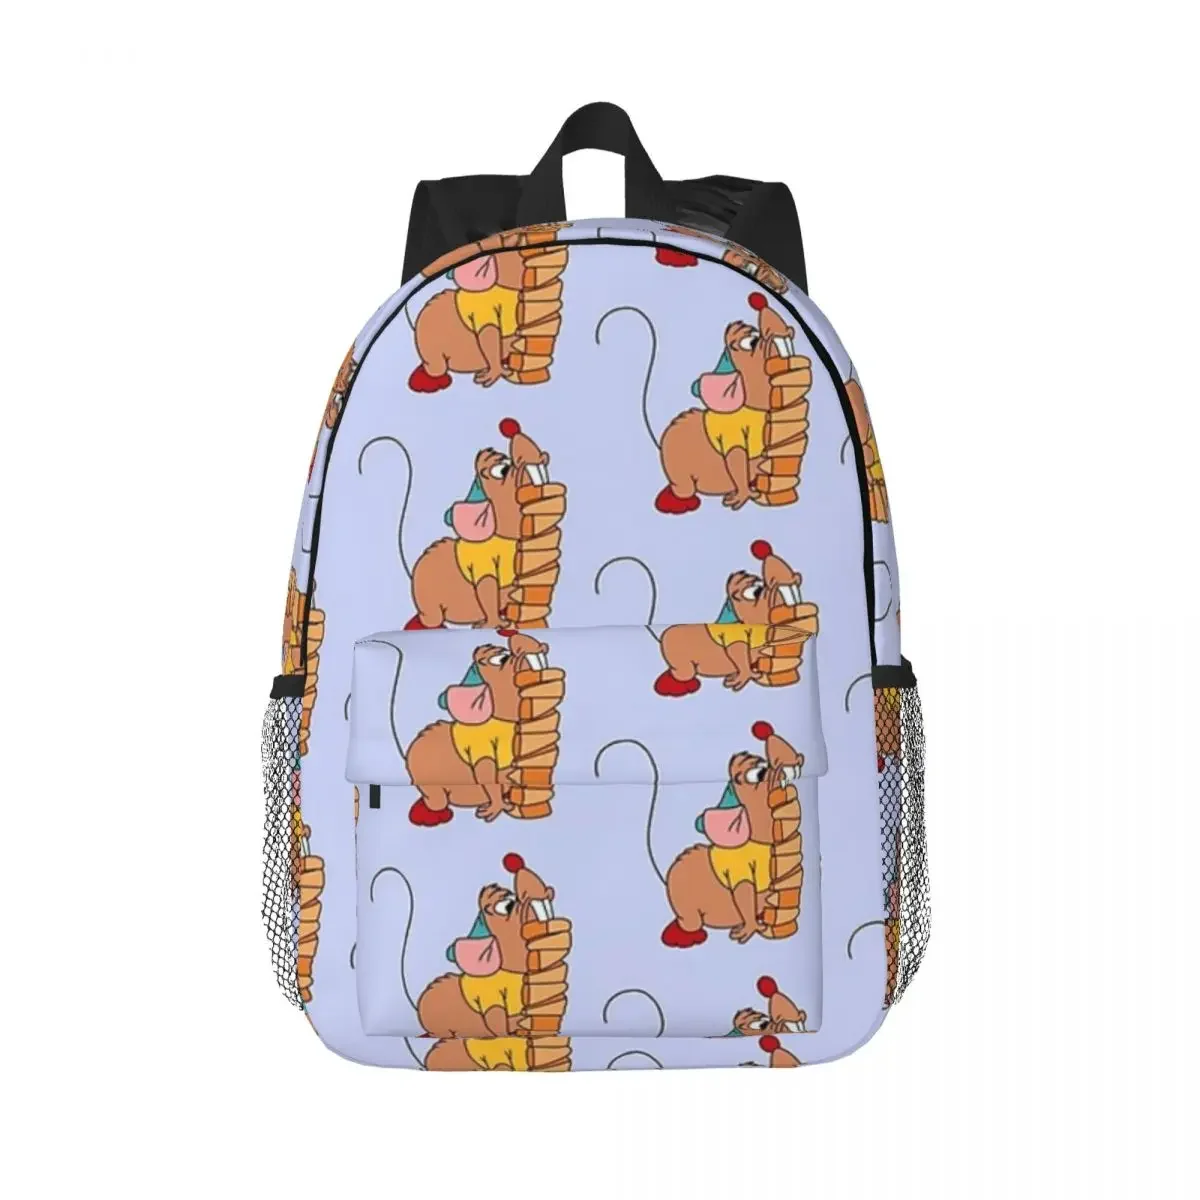 

Gus Gus Carrying Cheese Backpacks Teenager Bookbag Casual Children School Bags Travel Rucksack Shoulder Bag Large Capacity